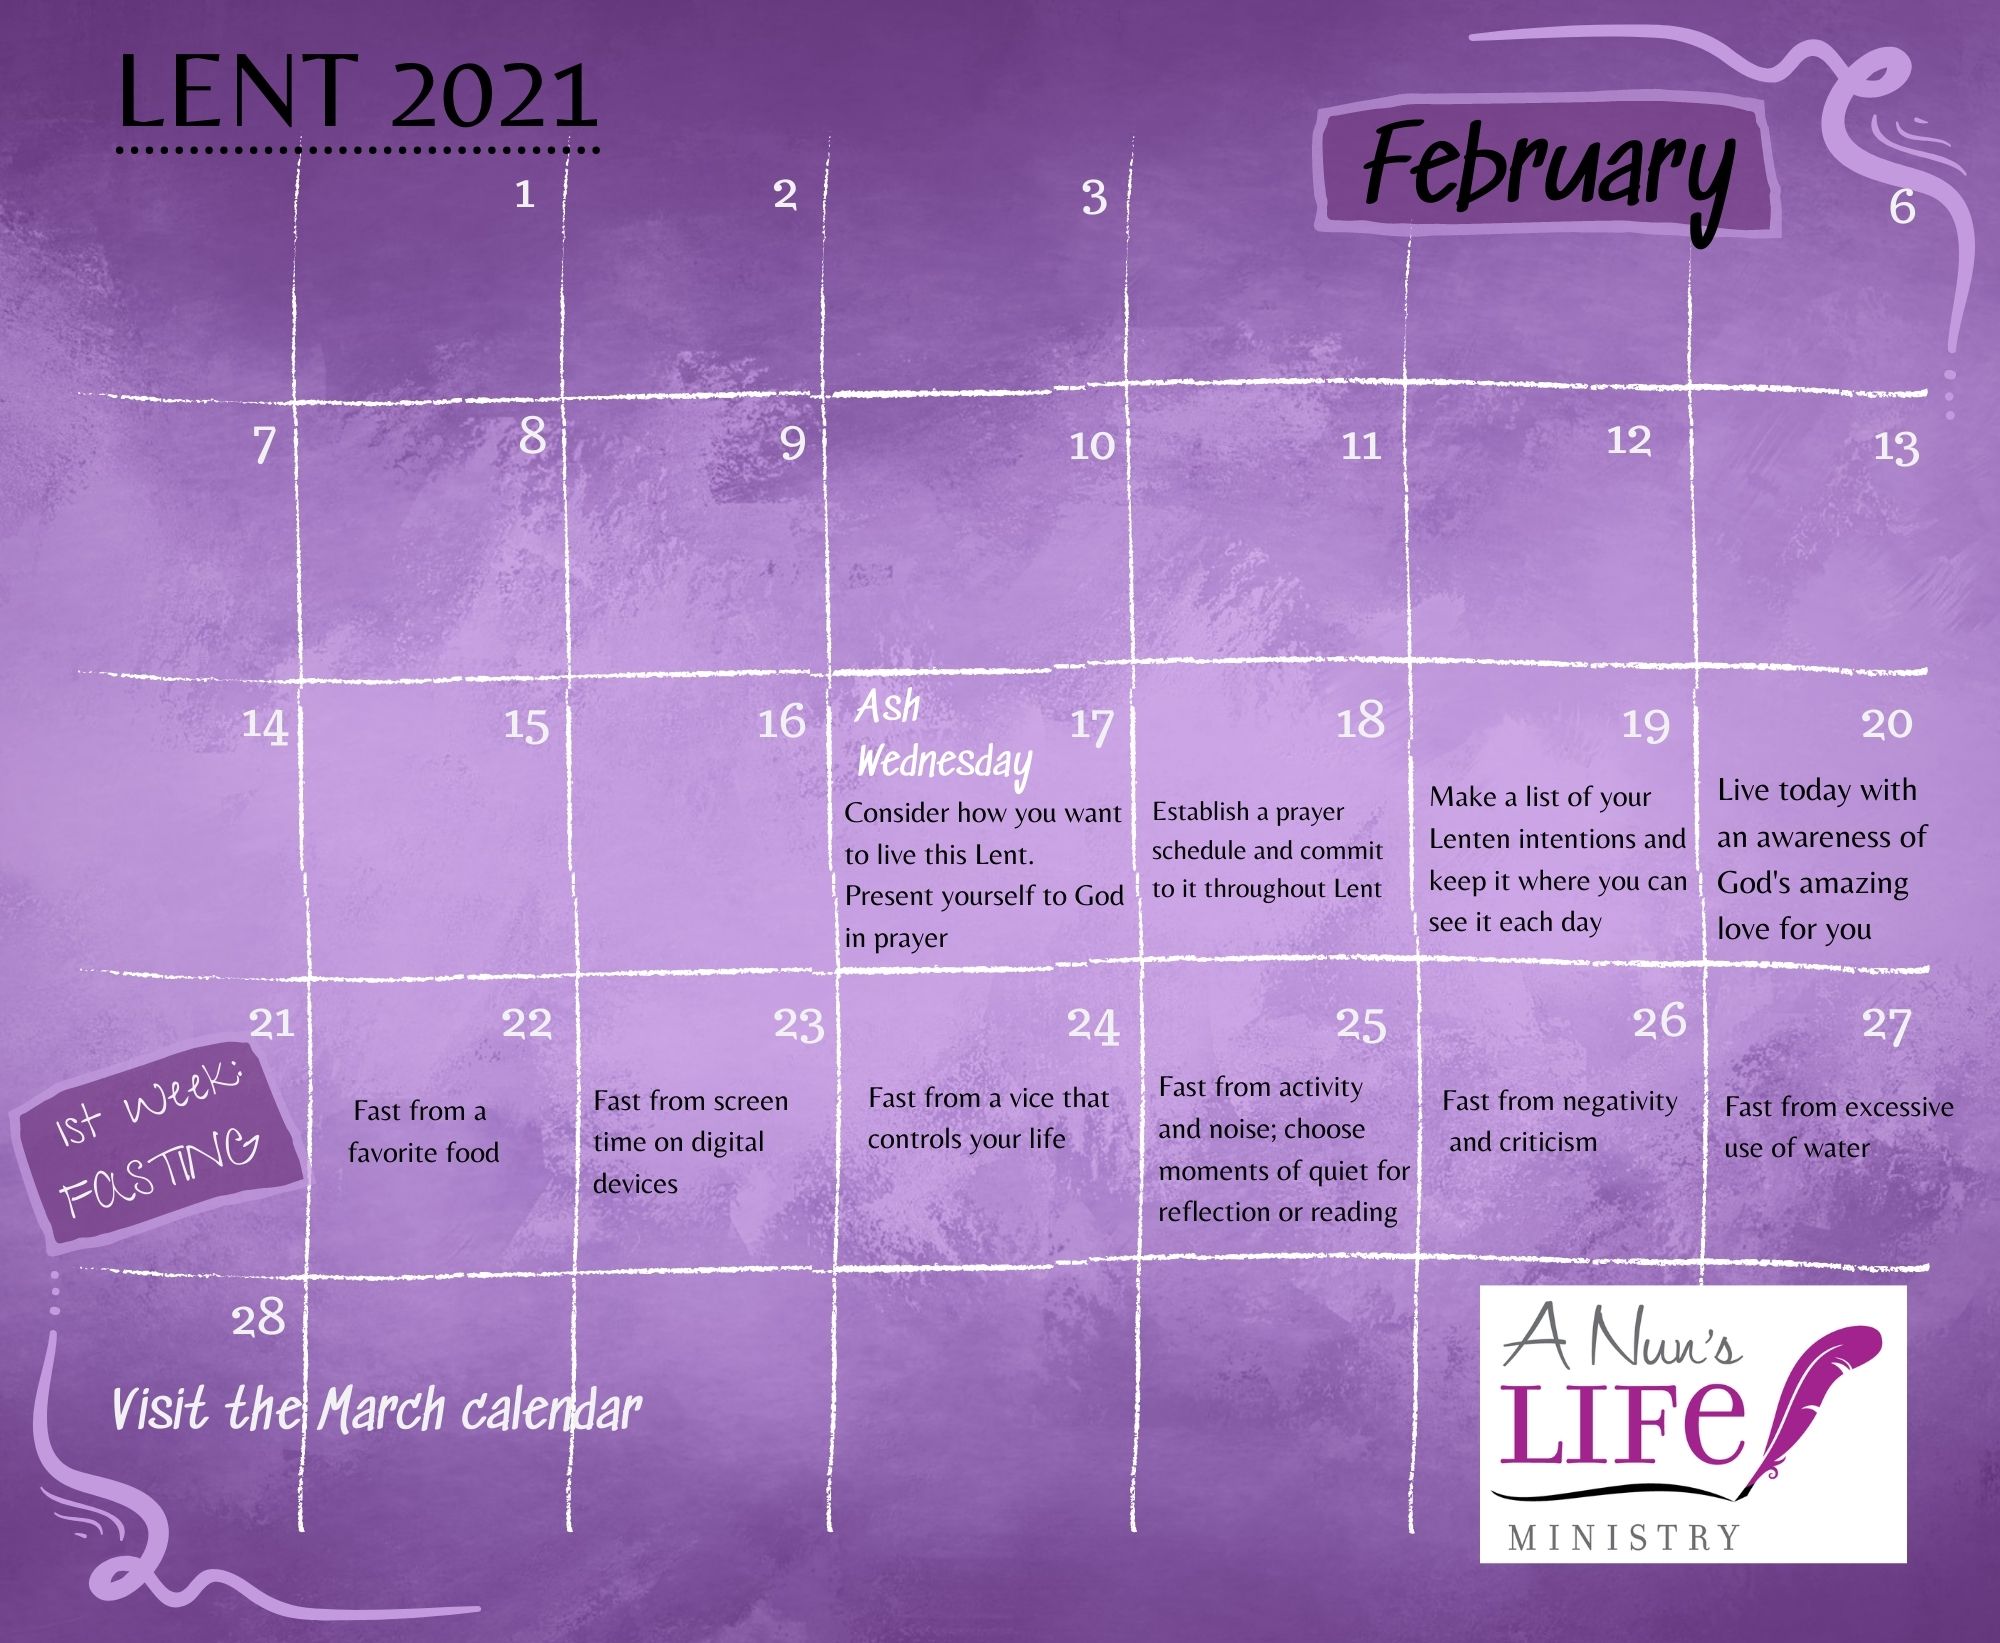 Lenten Calendar 2021 A Nuns Life Ministry